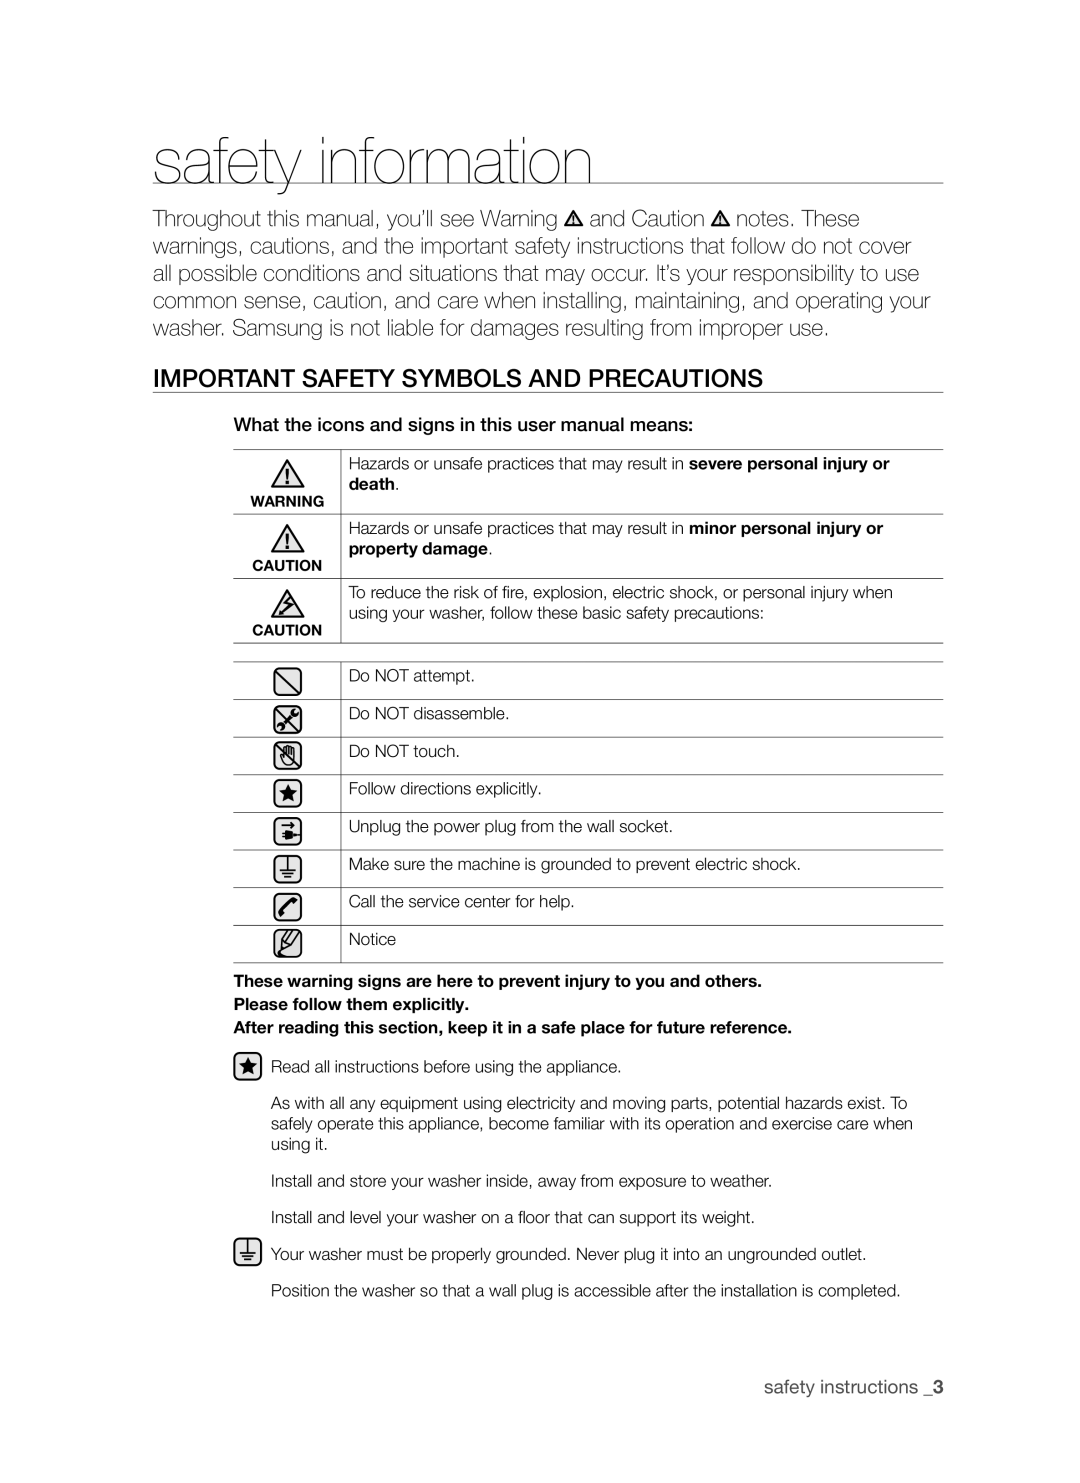 Samsung SW75V9W, SW65V9W user manual safety instructions 